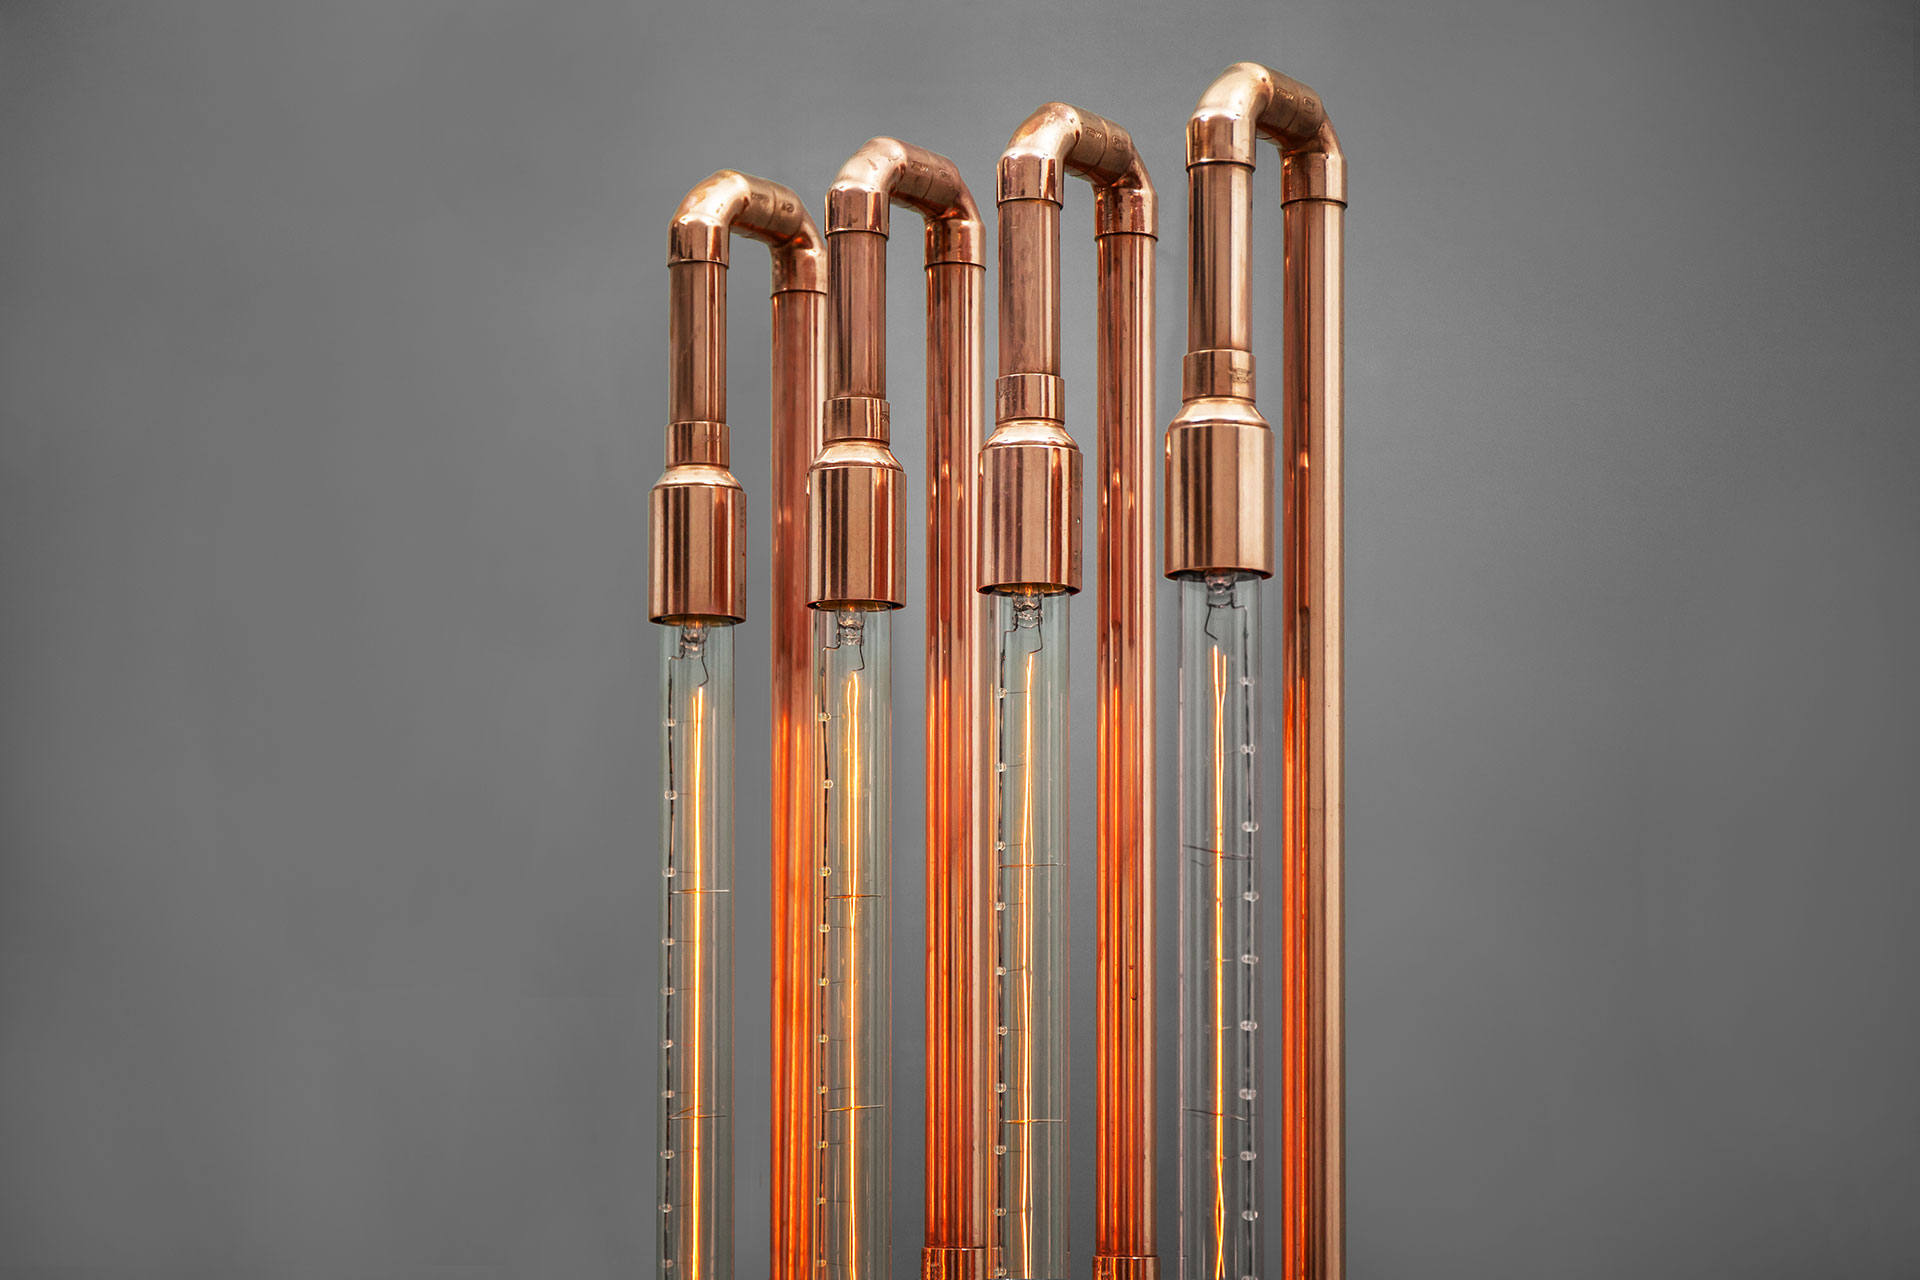 Long Edison bulbs in copper floor lamp inspired by industrial design